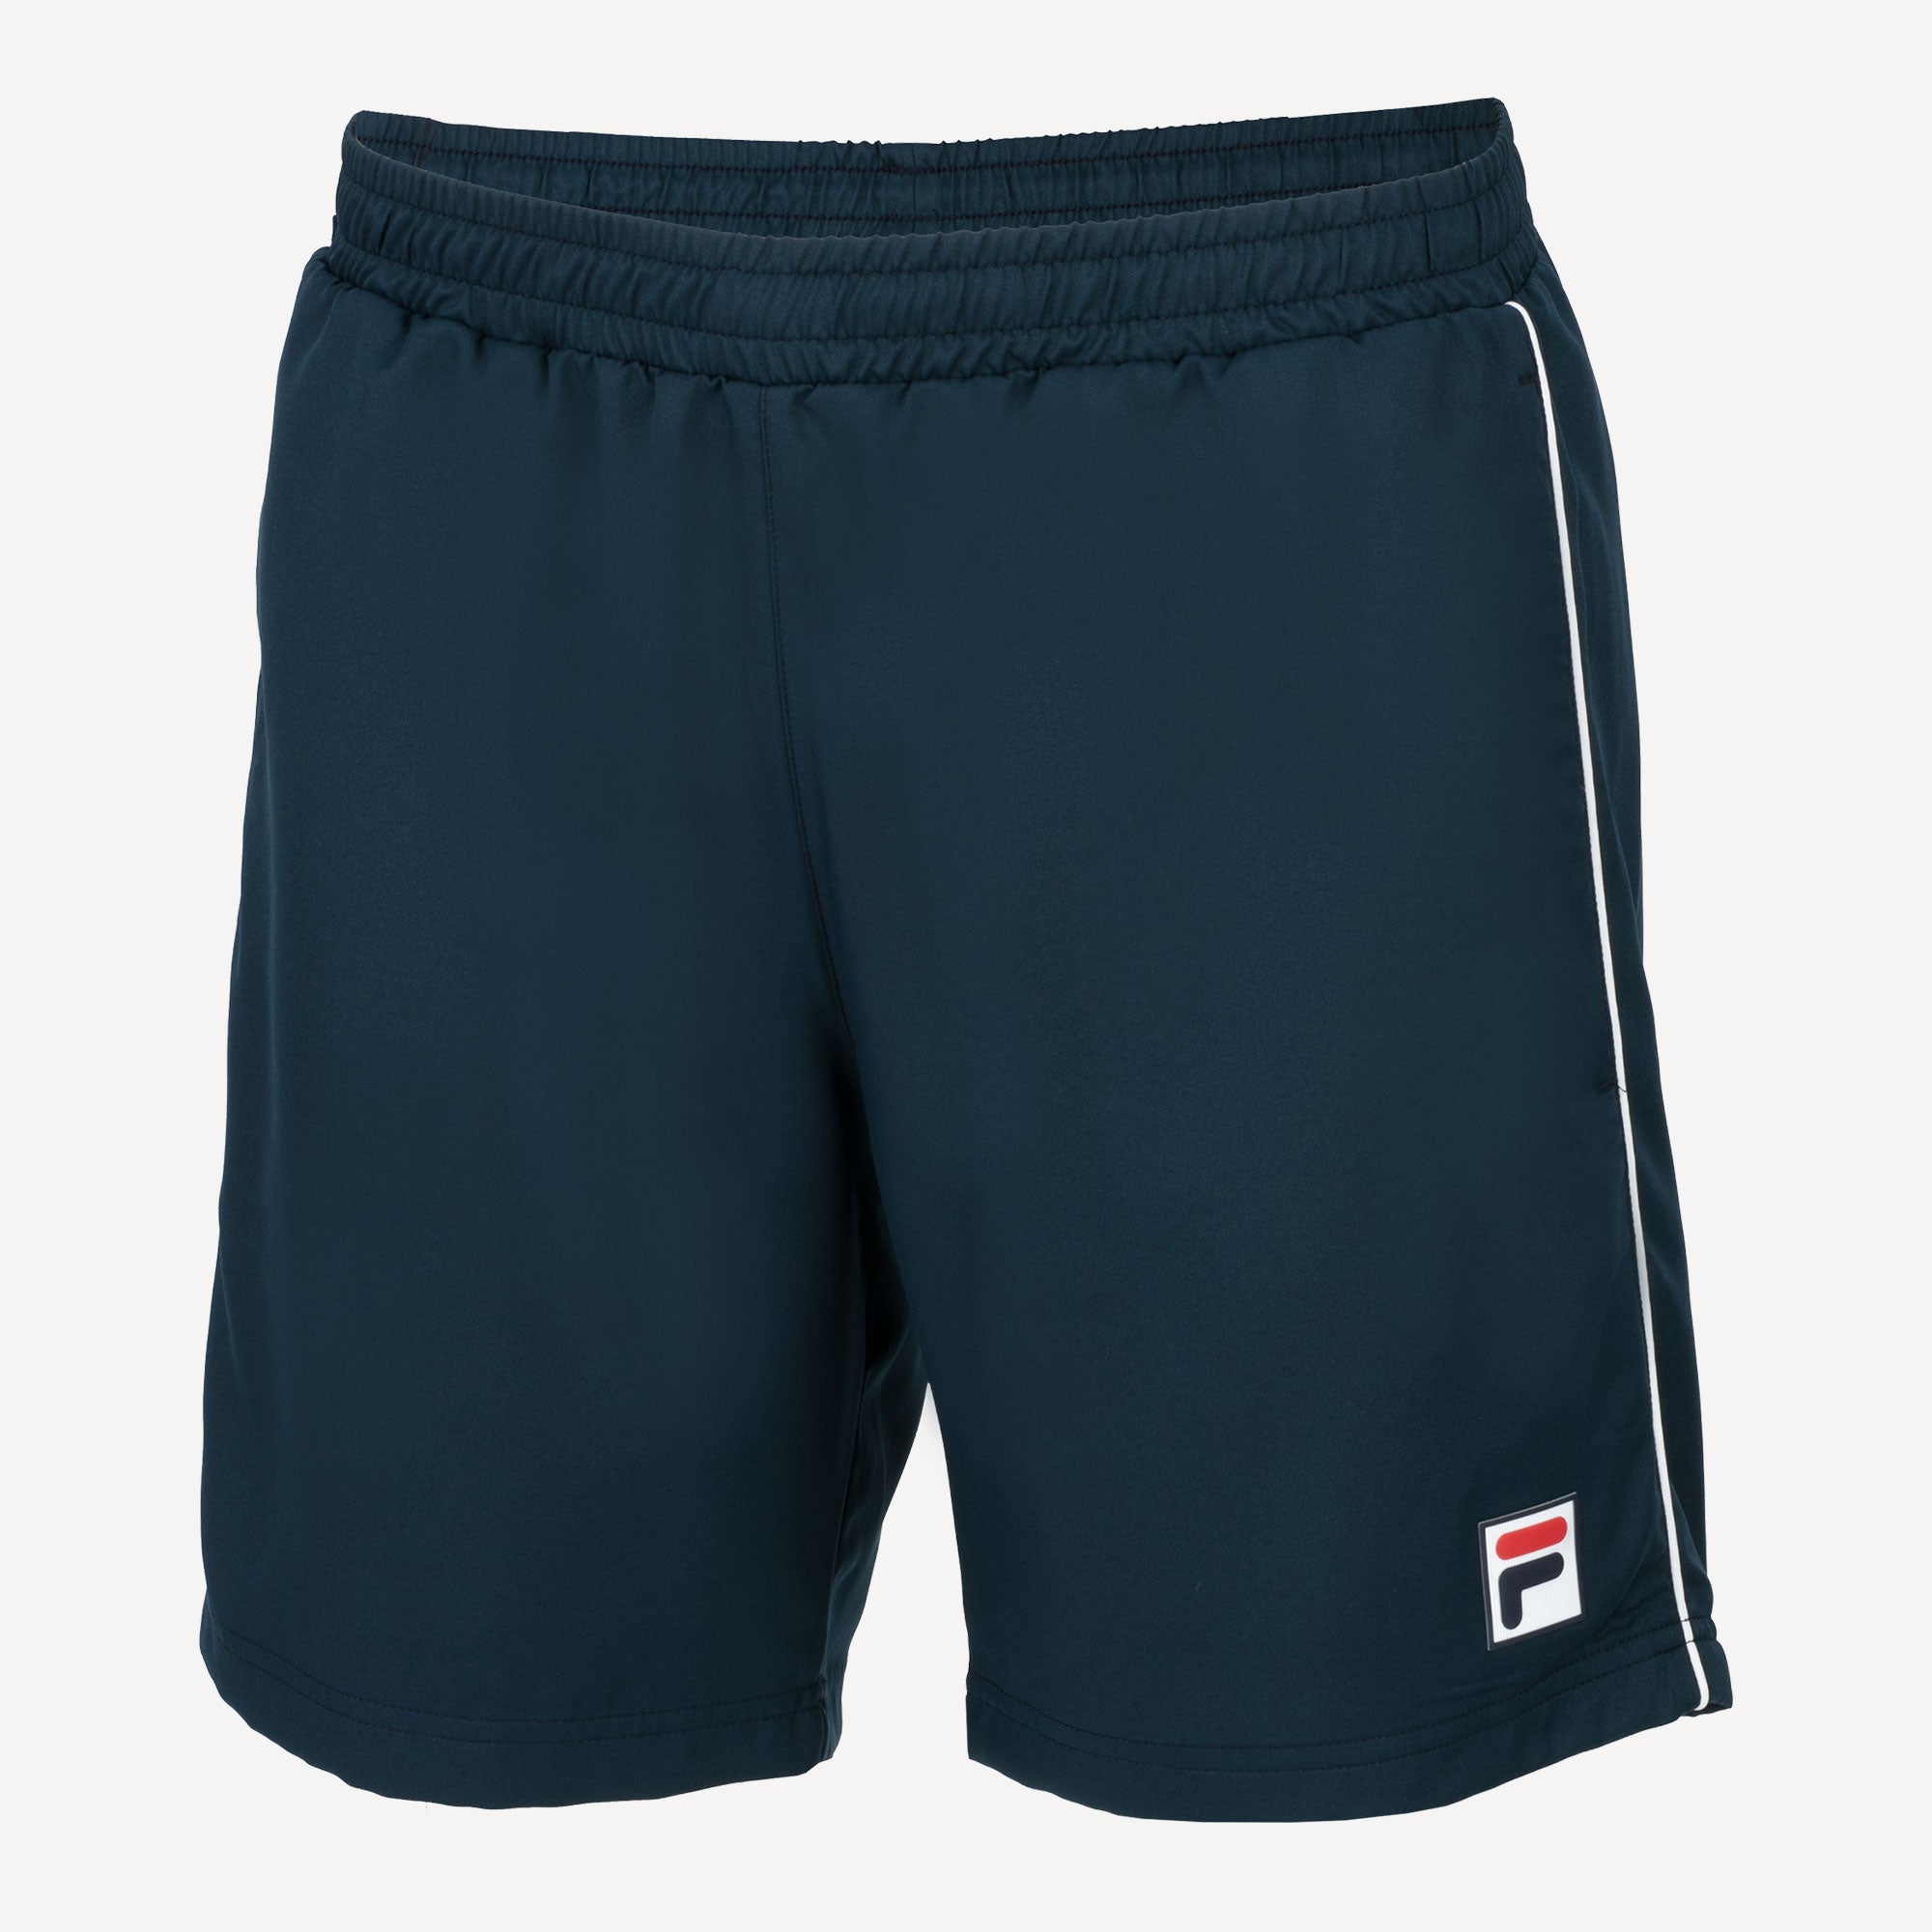 Fila Leon Men's Tennis Shorts Blue (1)